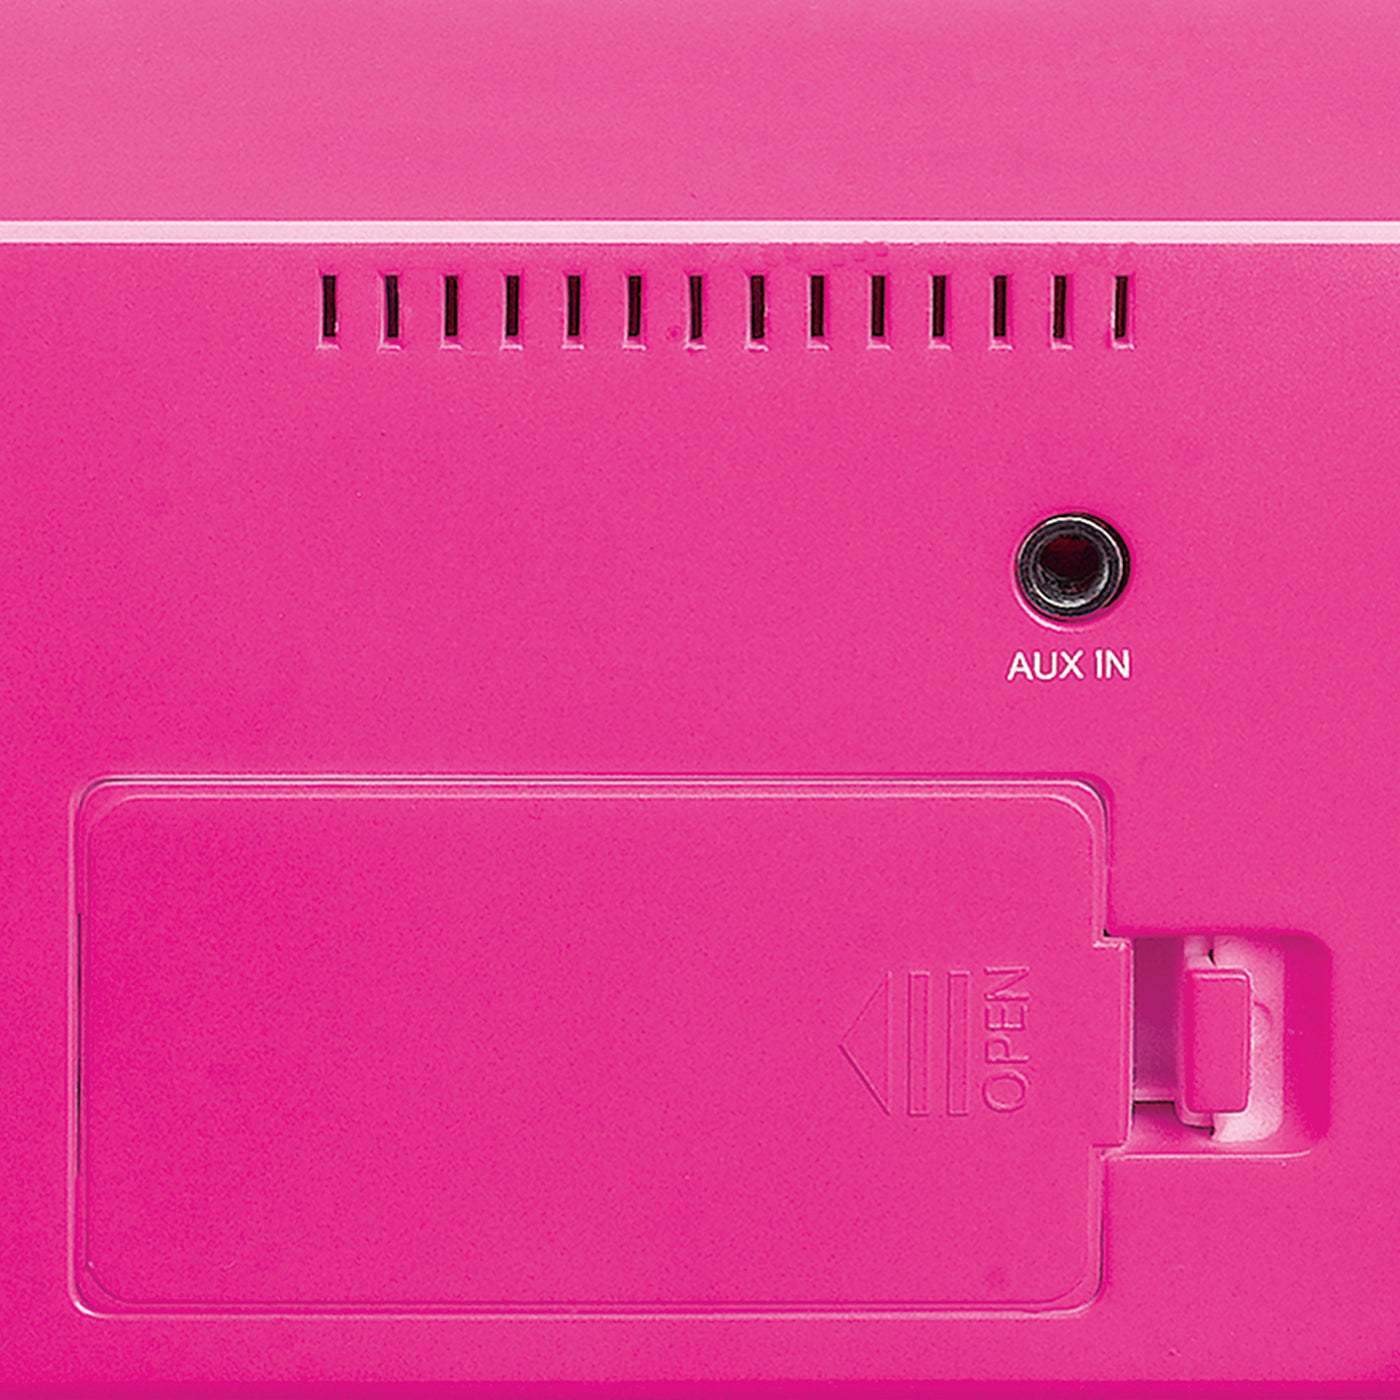 LENCO CR-510PK - Stereo FM clock radio with 0,9" LED display - Pink